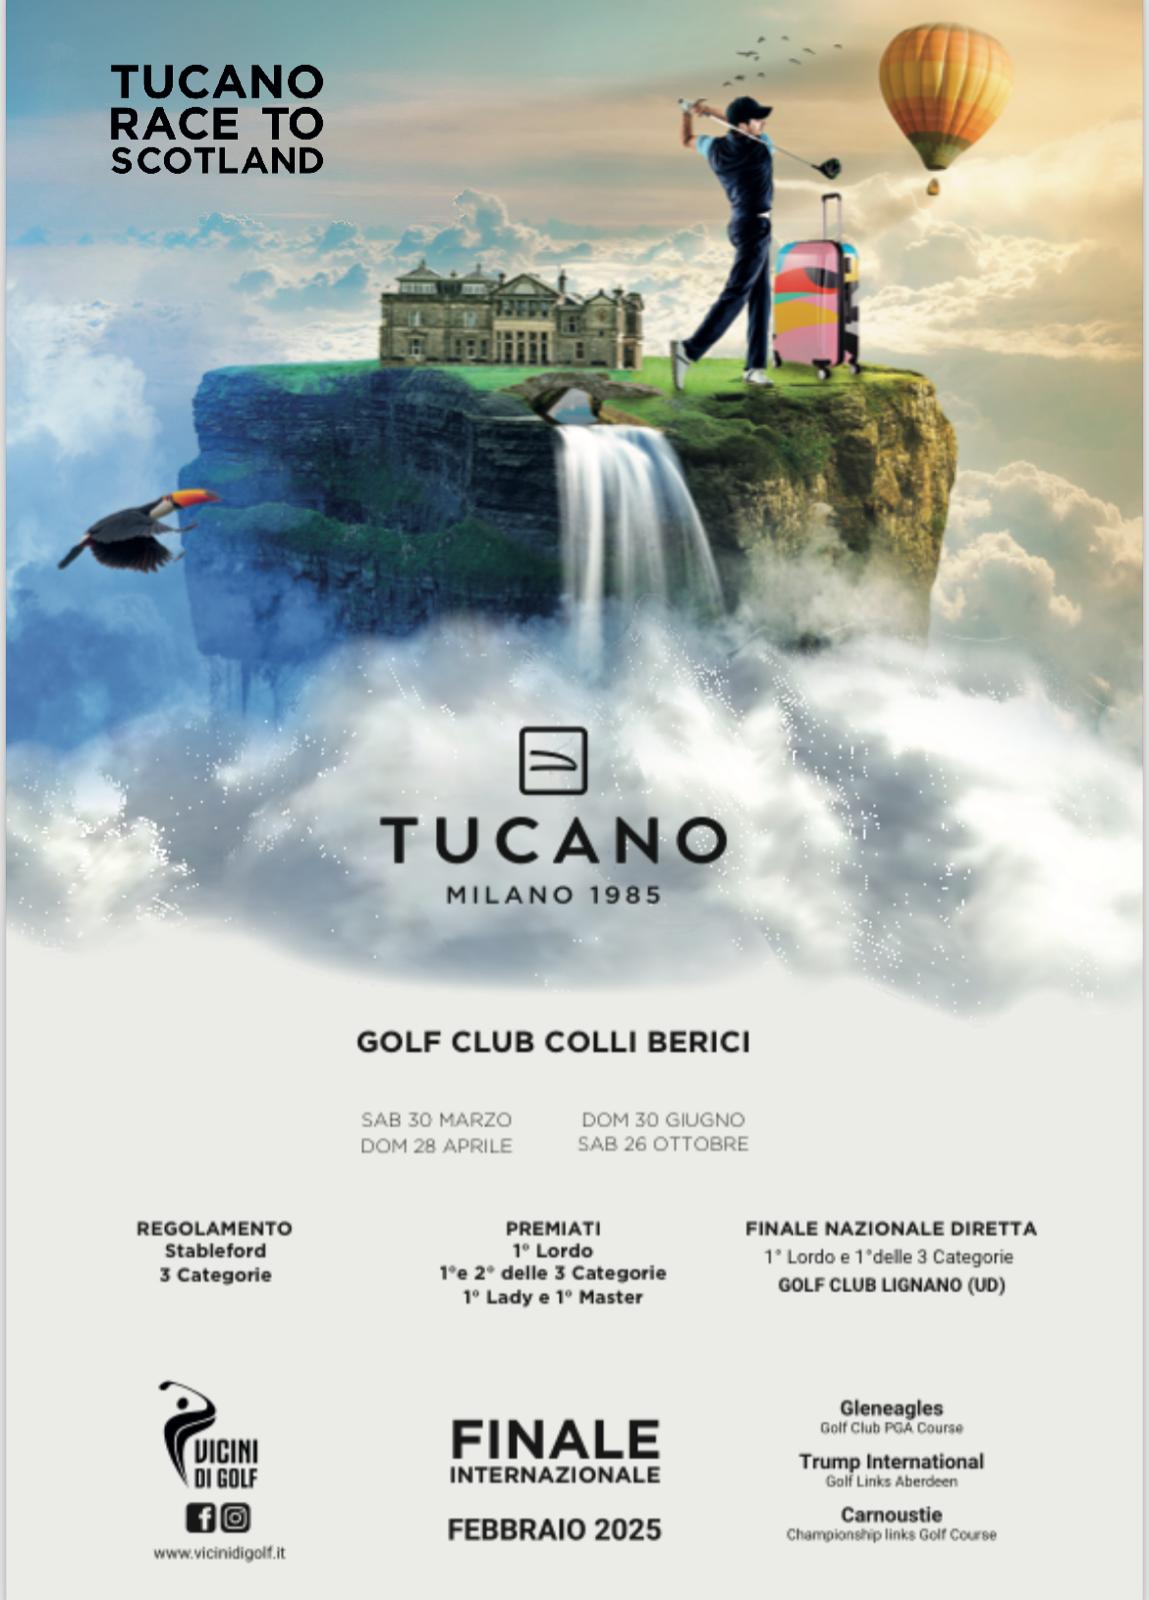 Tucano – Race to Scotland